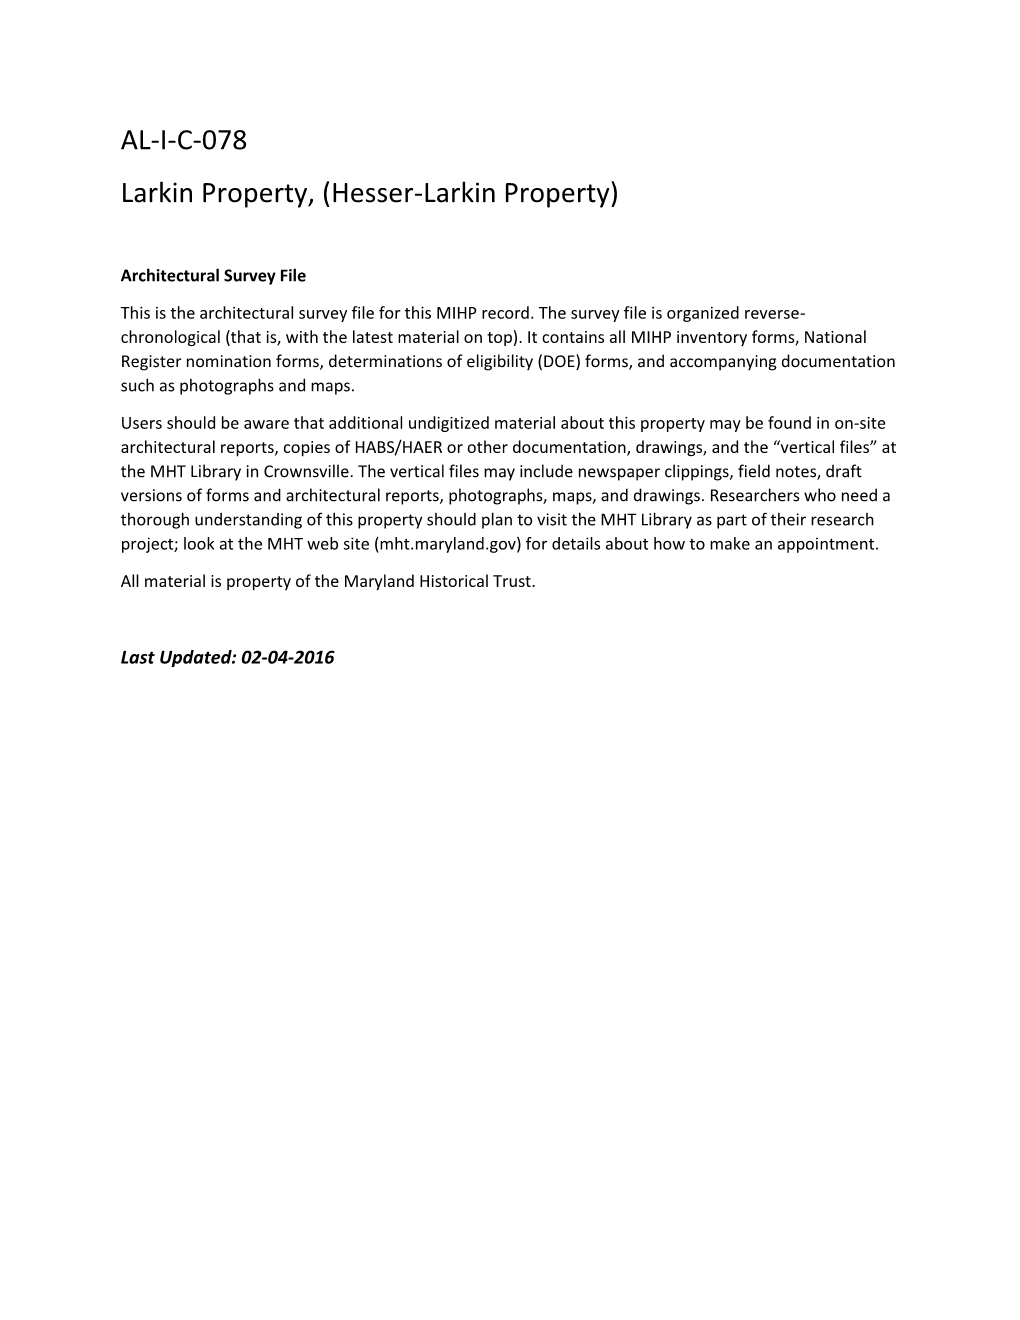 AL-IC-078 Larkin Property